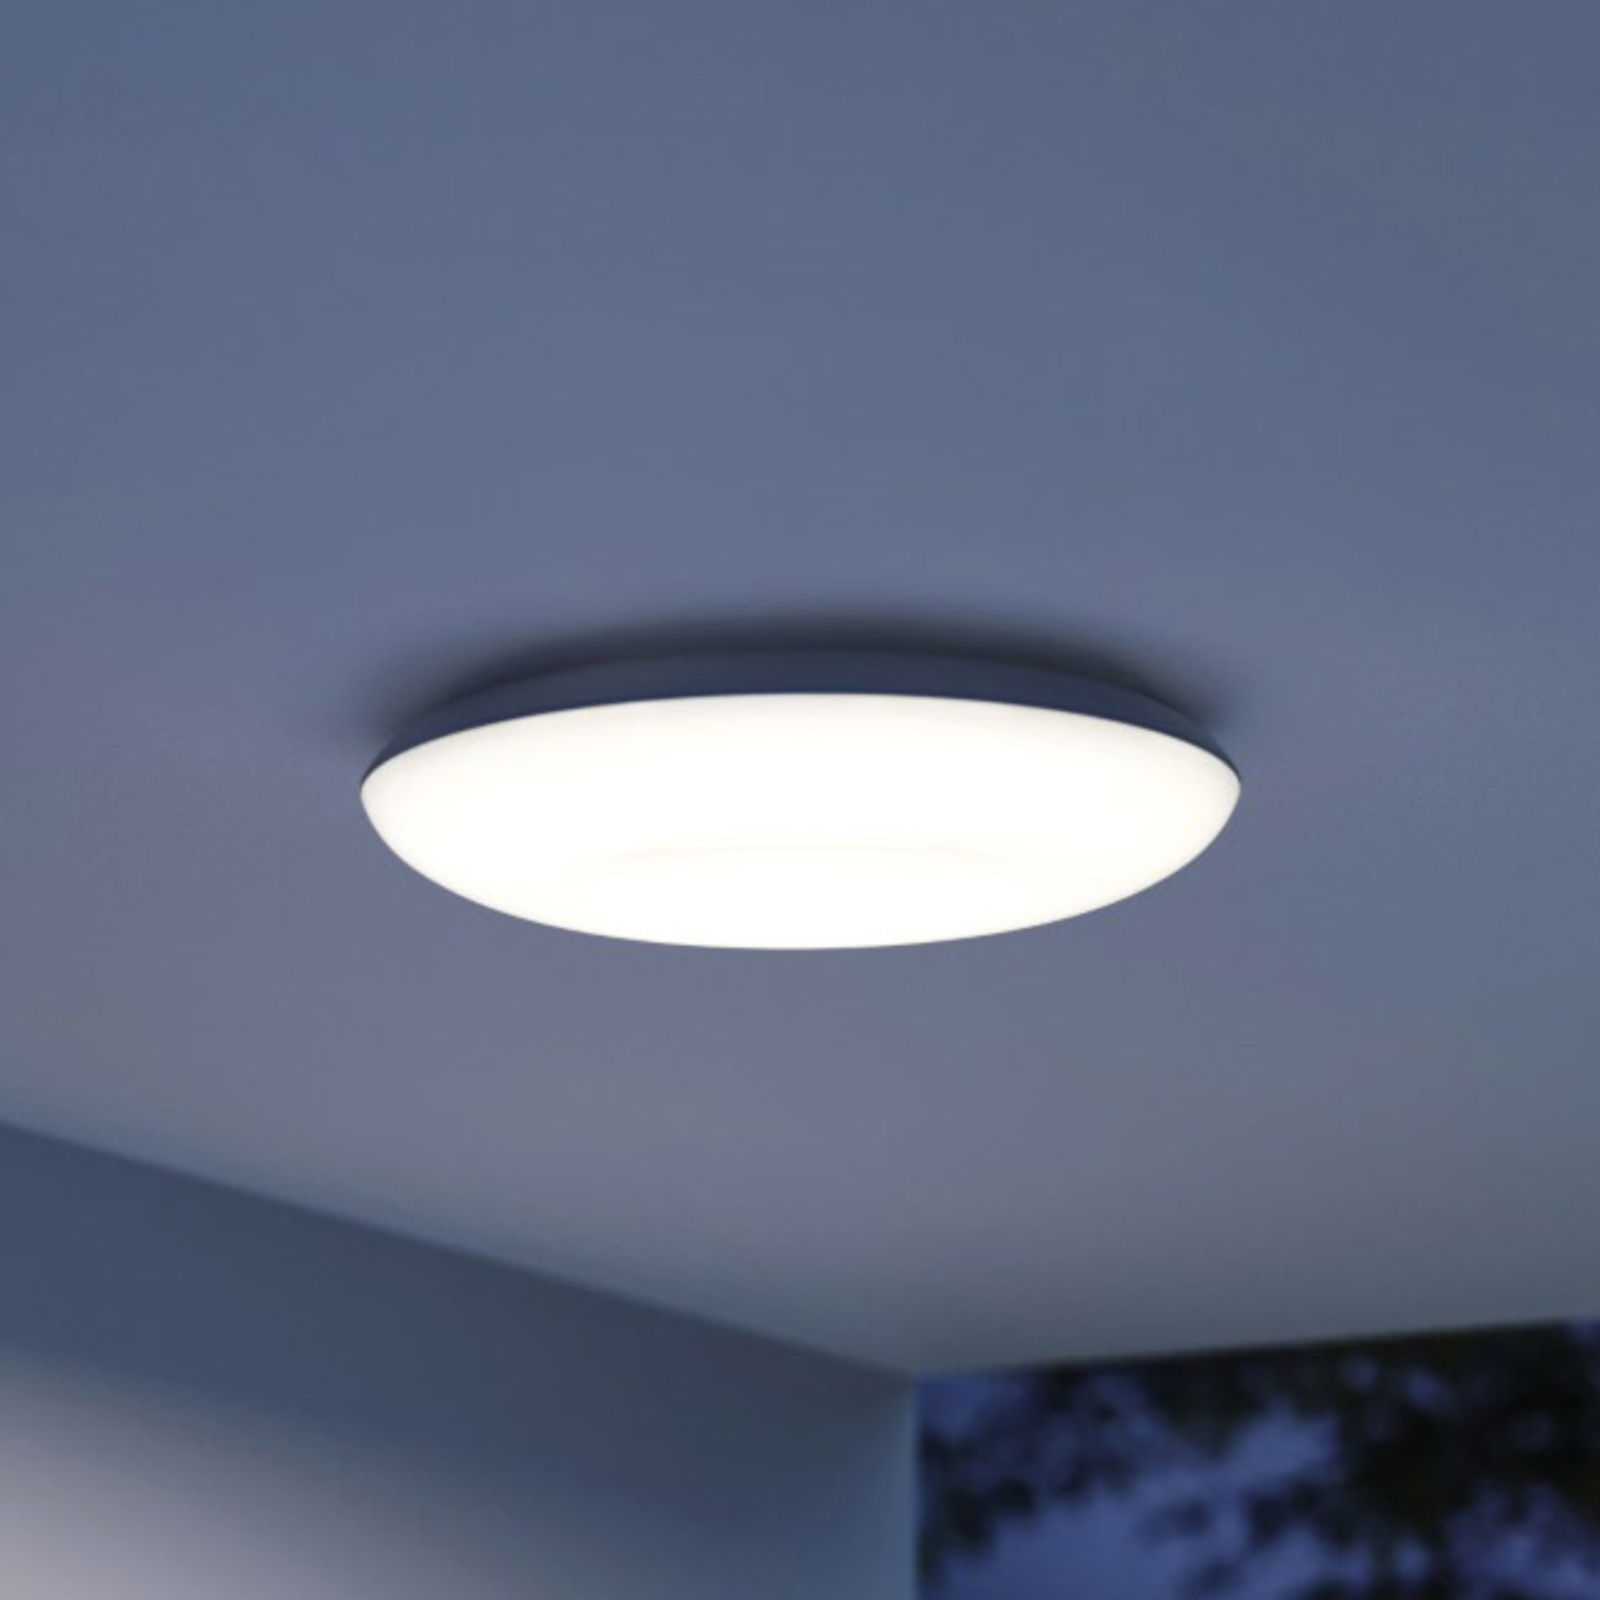 STEINEL Vario Quattro Pro ceiling lamp whit 4,000K